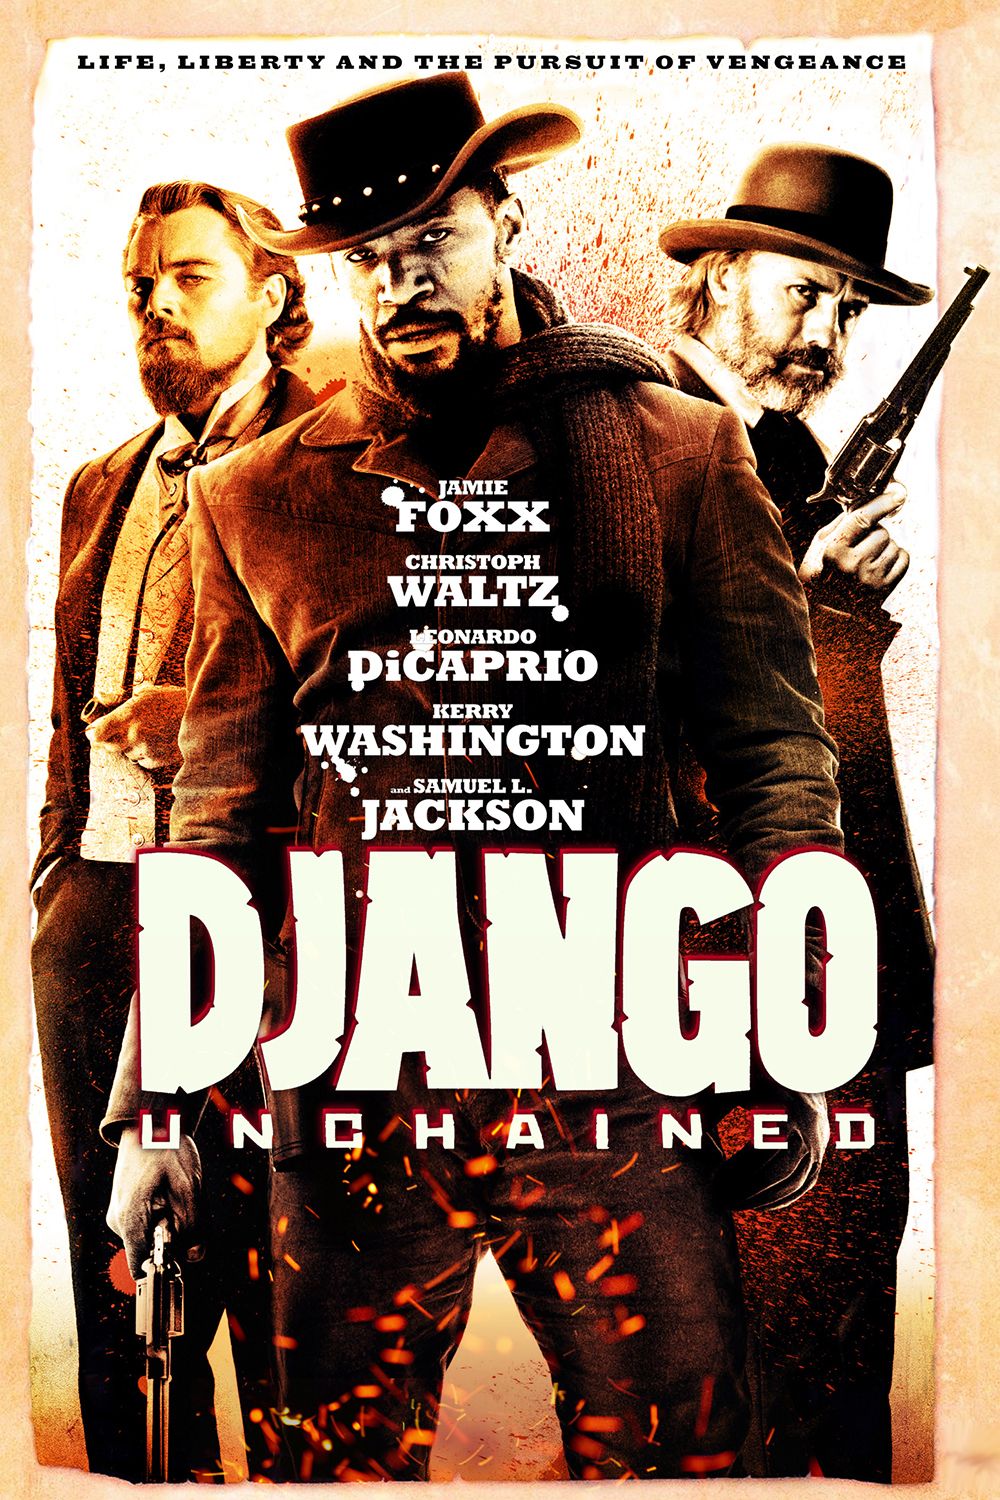 Django elszabadul online